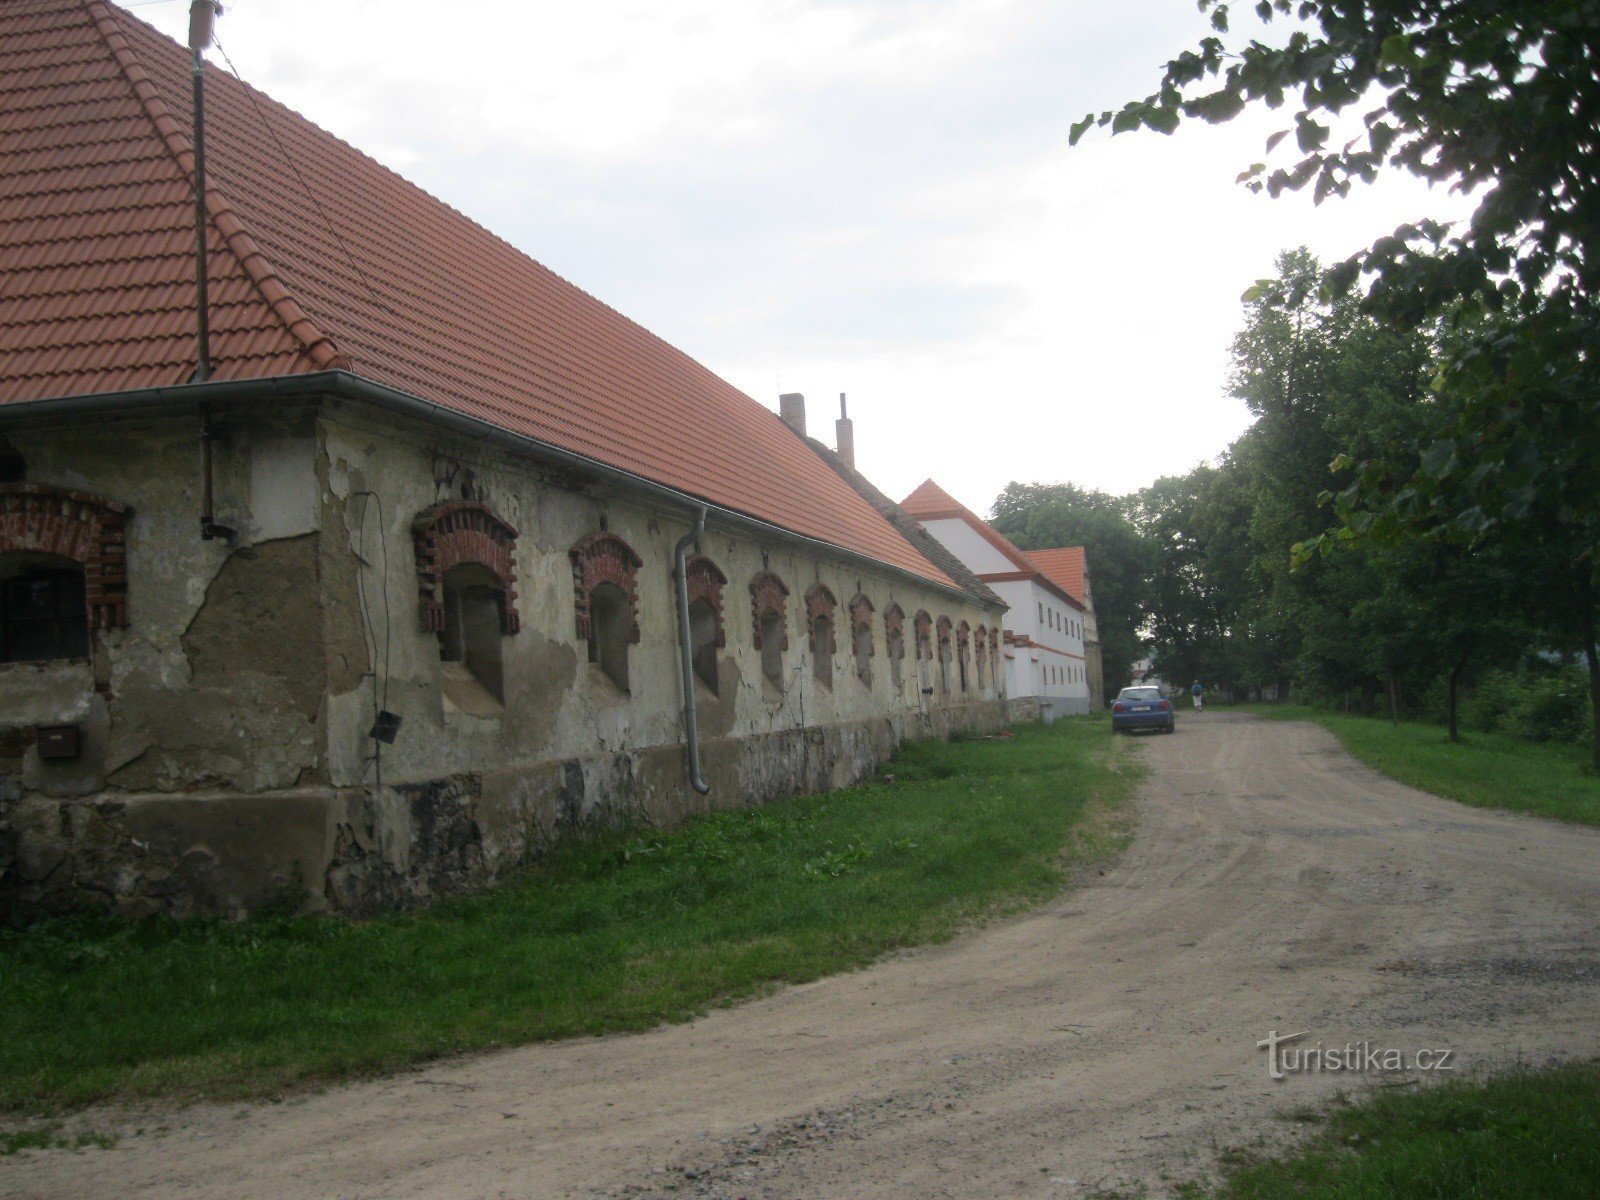 Phần cũ của Červený Újezdec